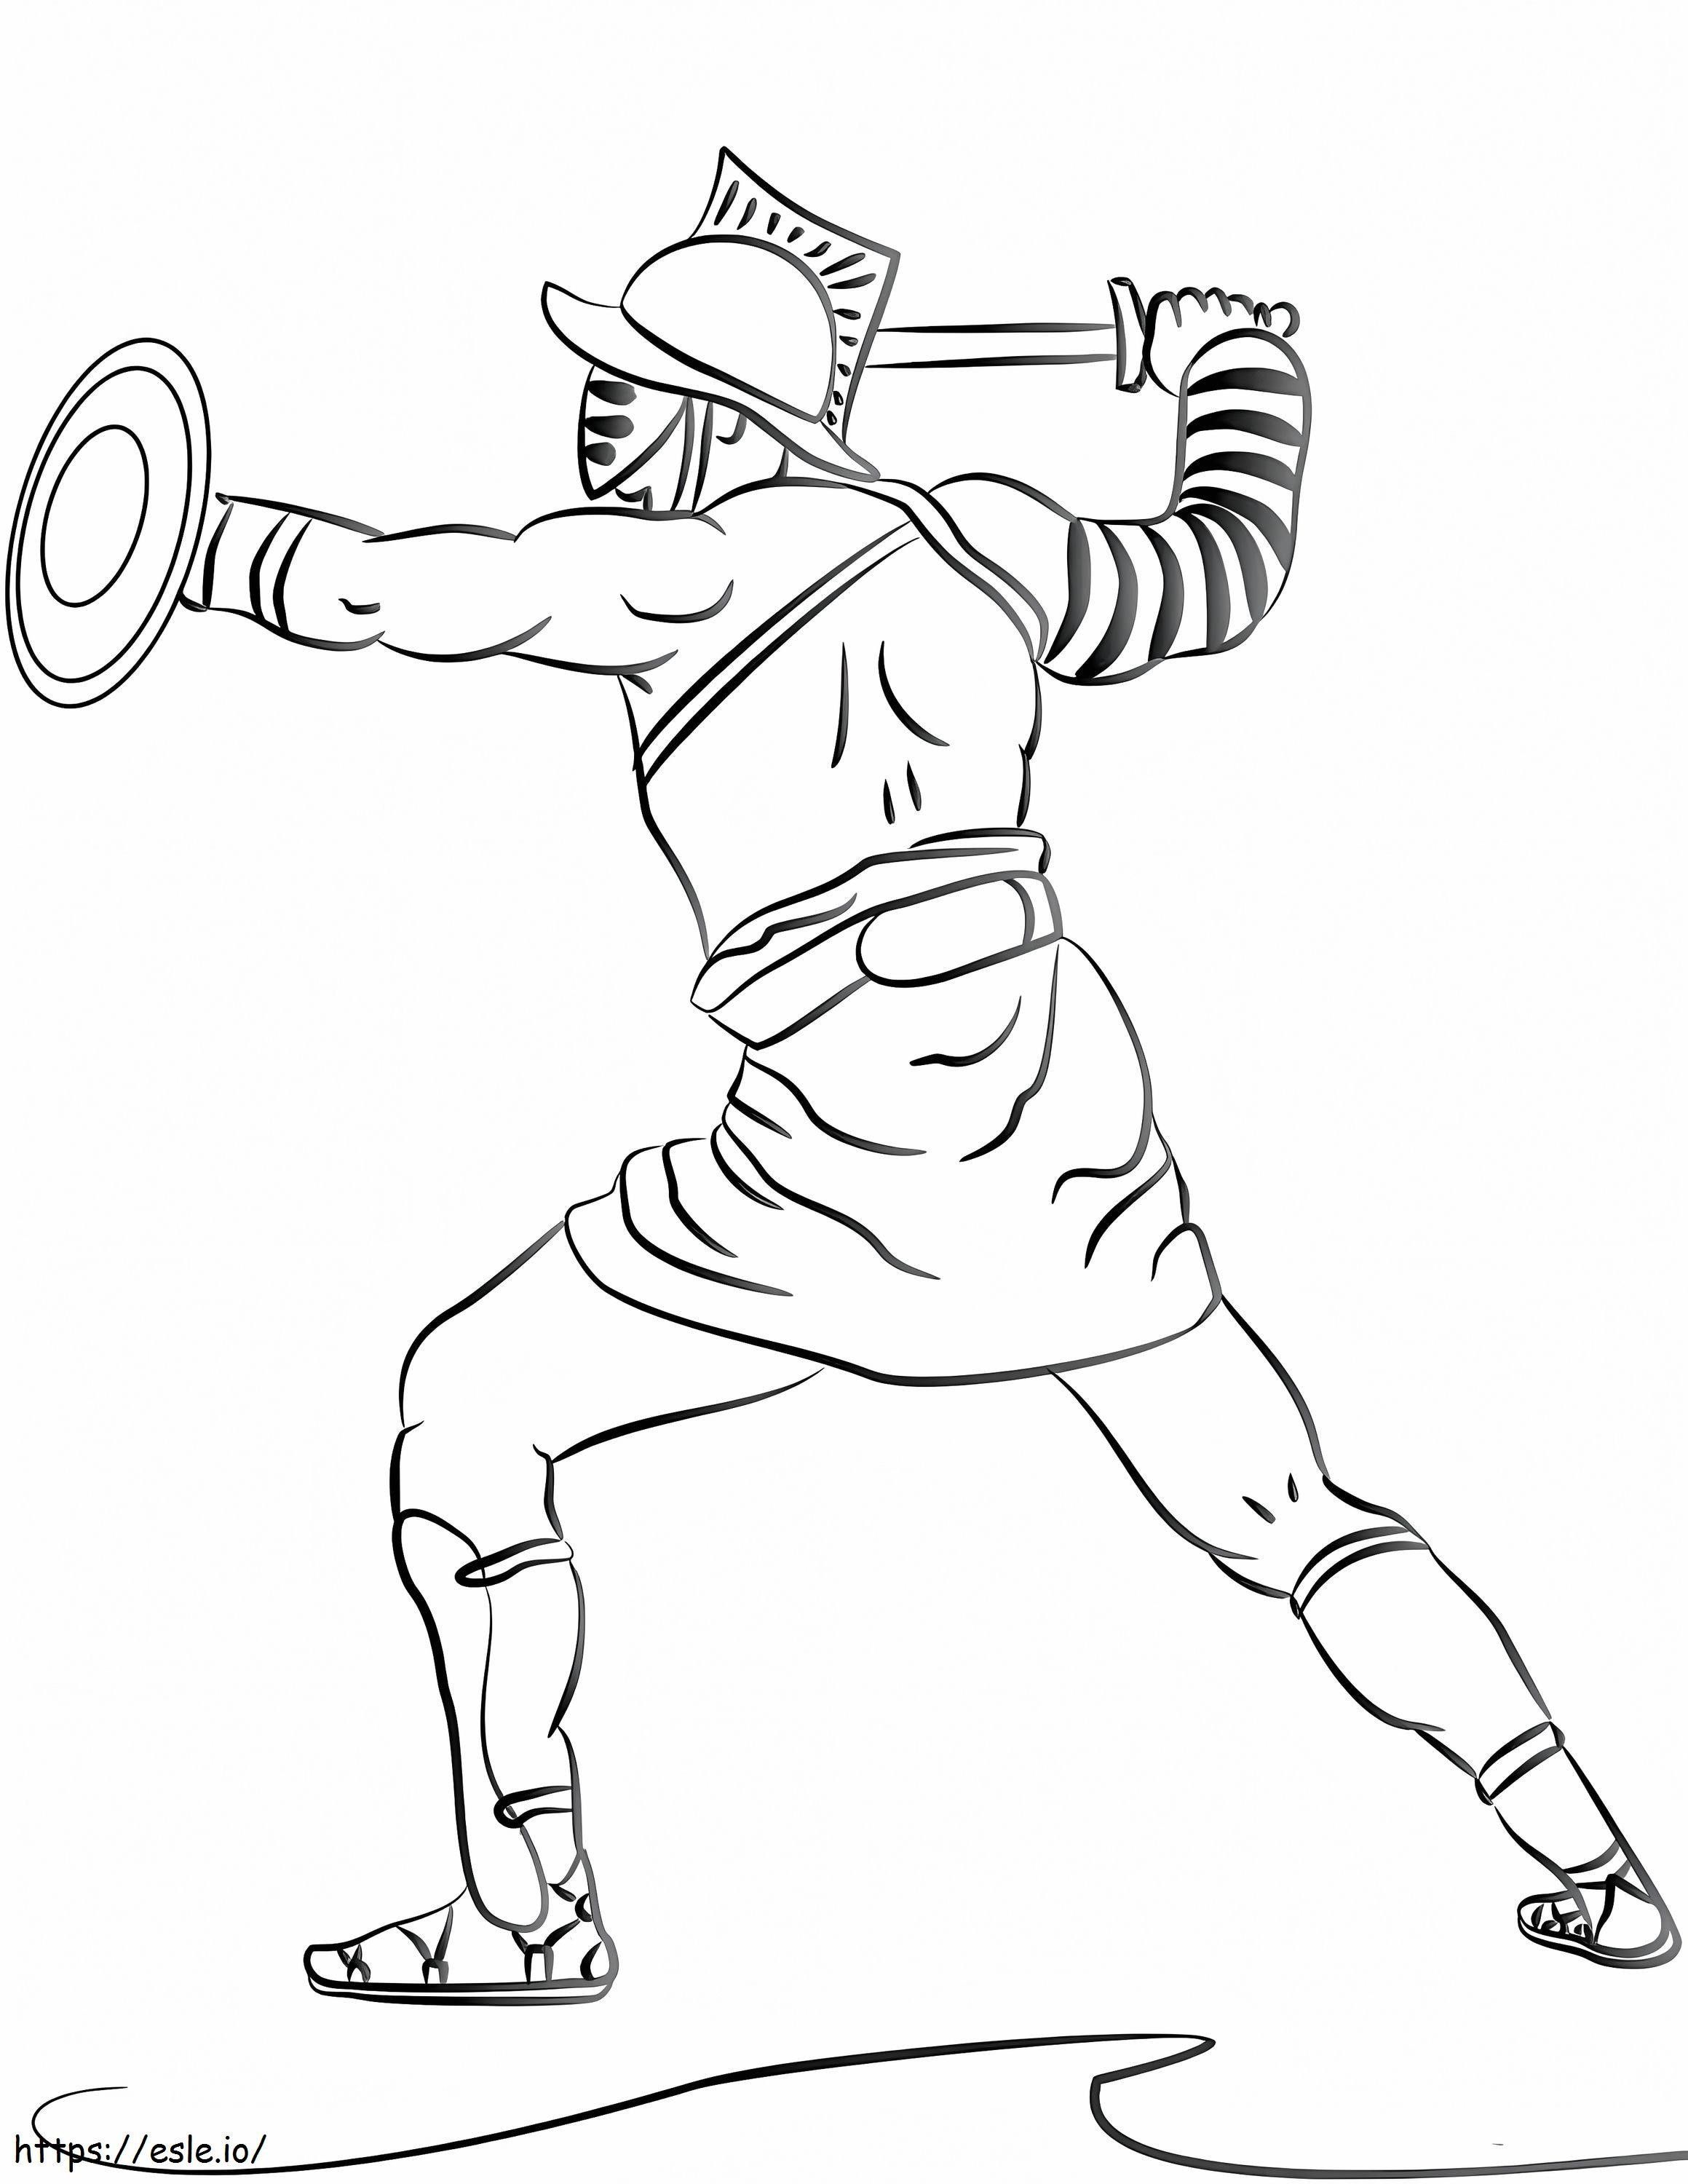 Roman Gladiator coloring page